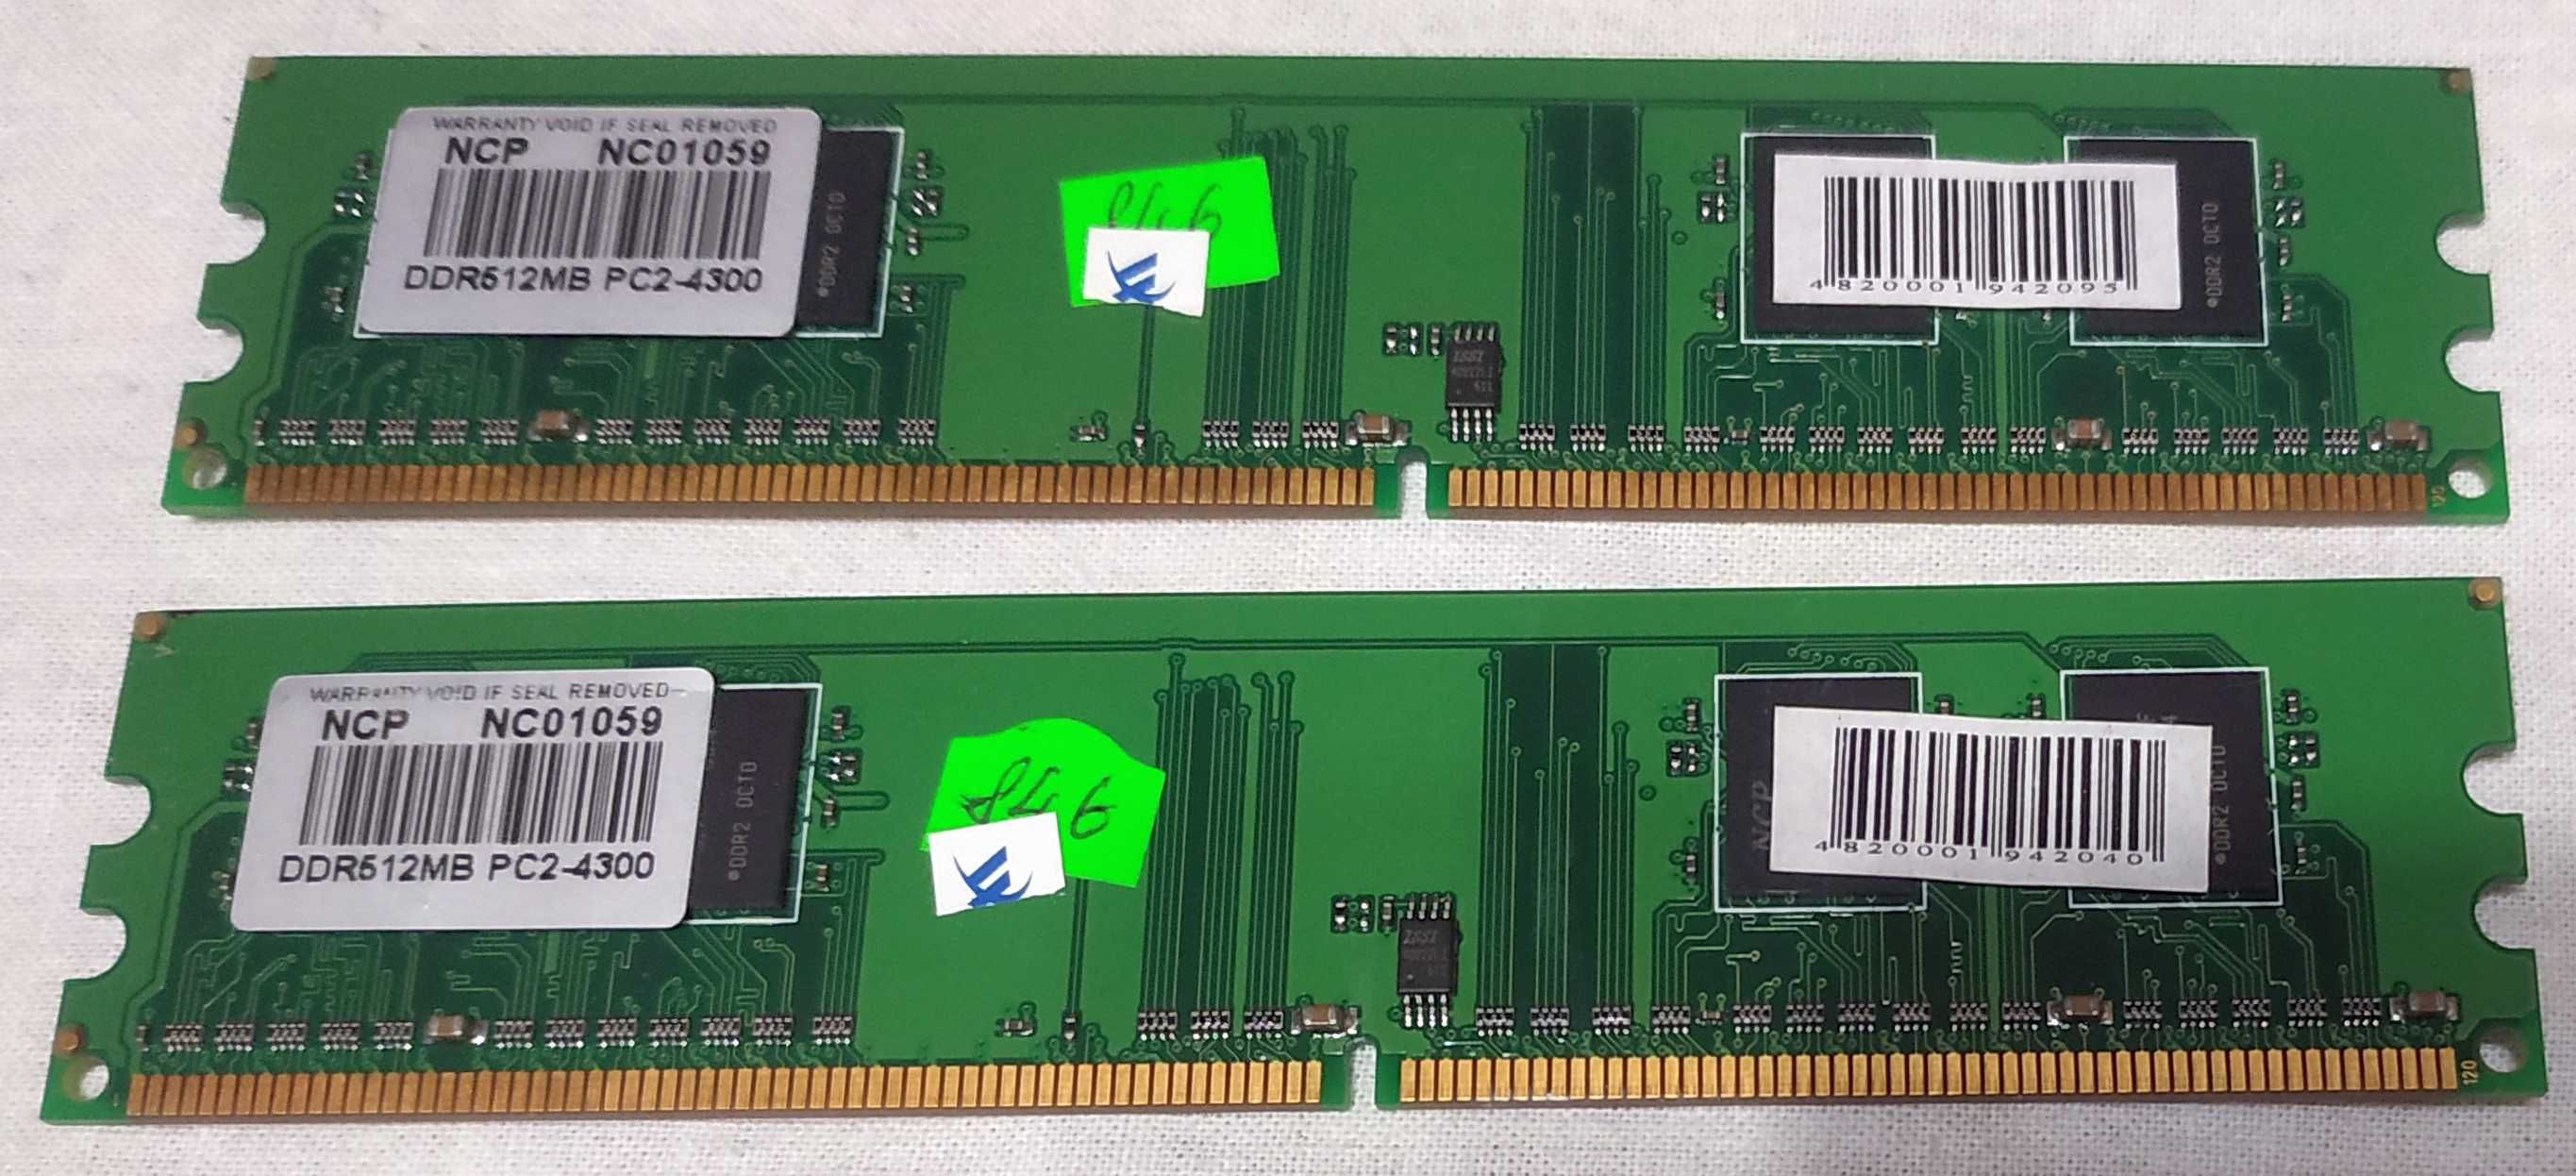 DDR2 оперативная память (ОЗУ) NCP 1Gb pc2-4300 (две планки по 512mb)